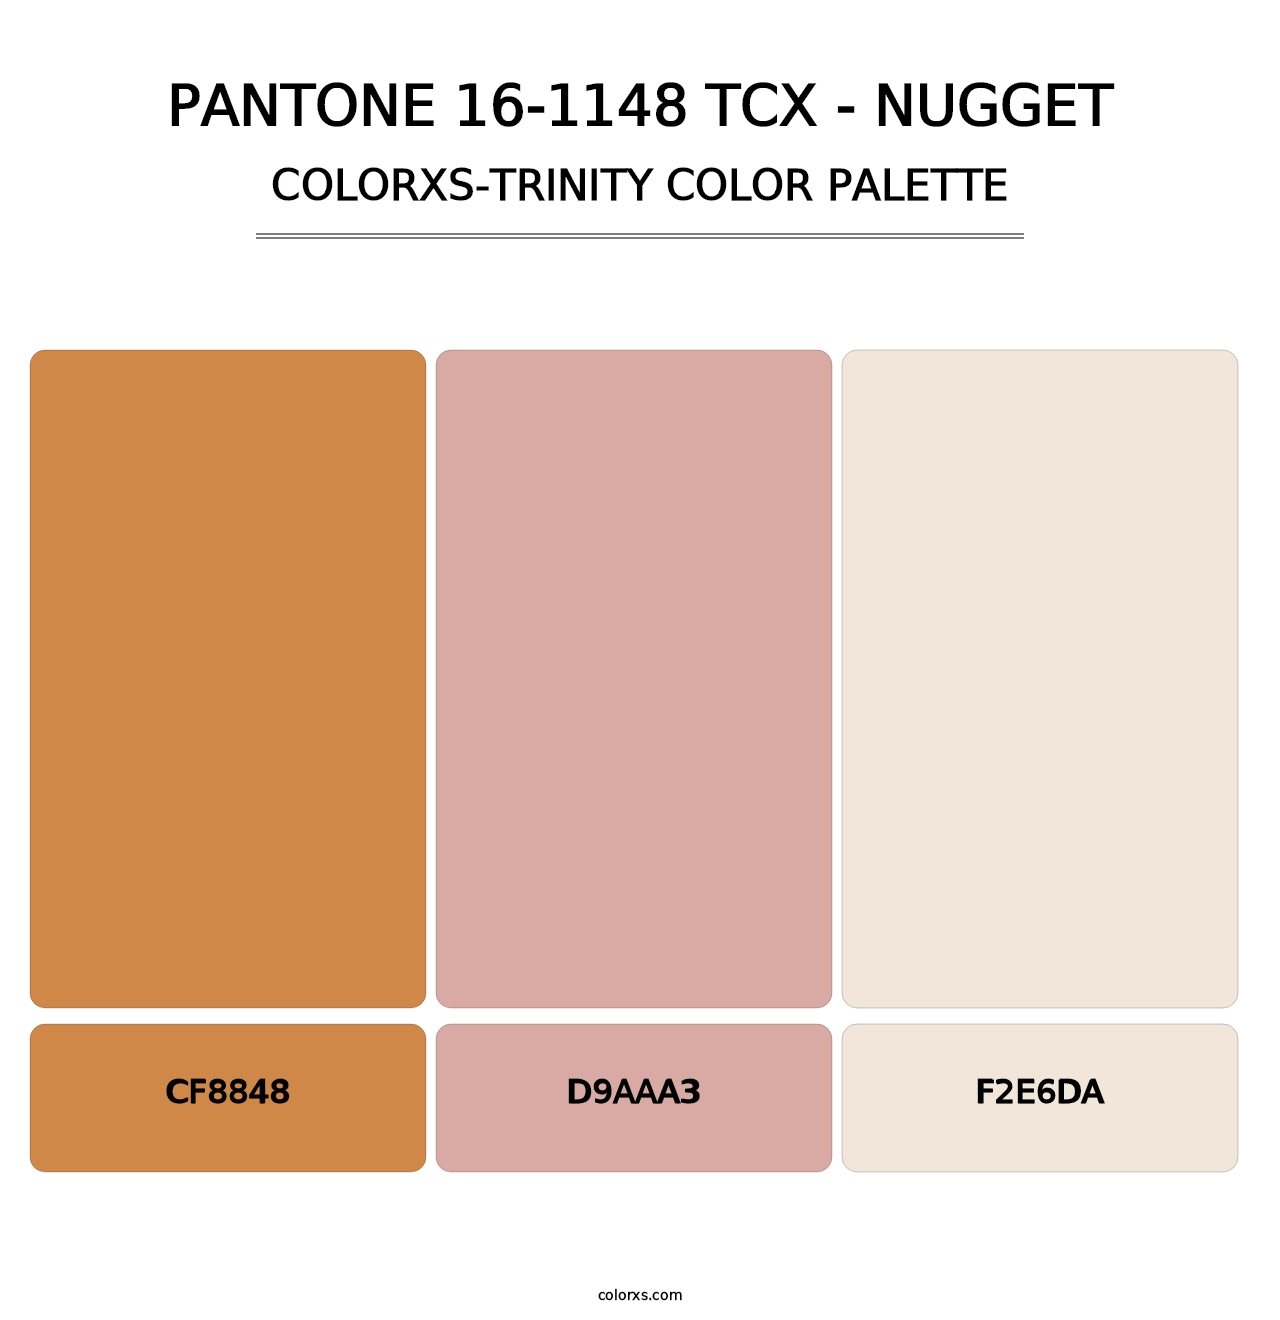 PANTONE 16-1148 TCX - Nugget - Colorxs Trinity Palette